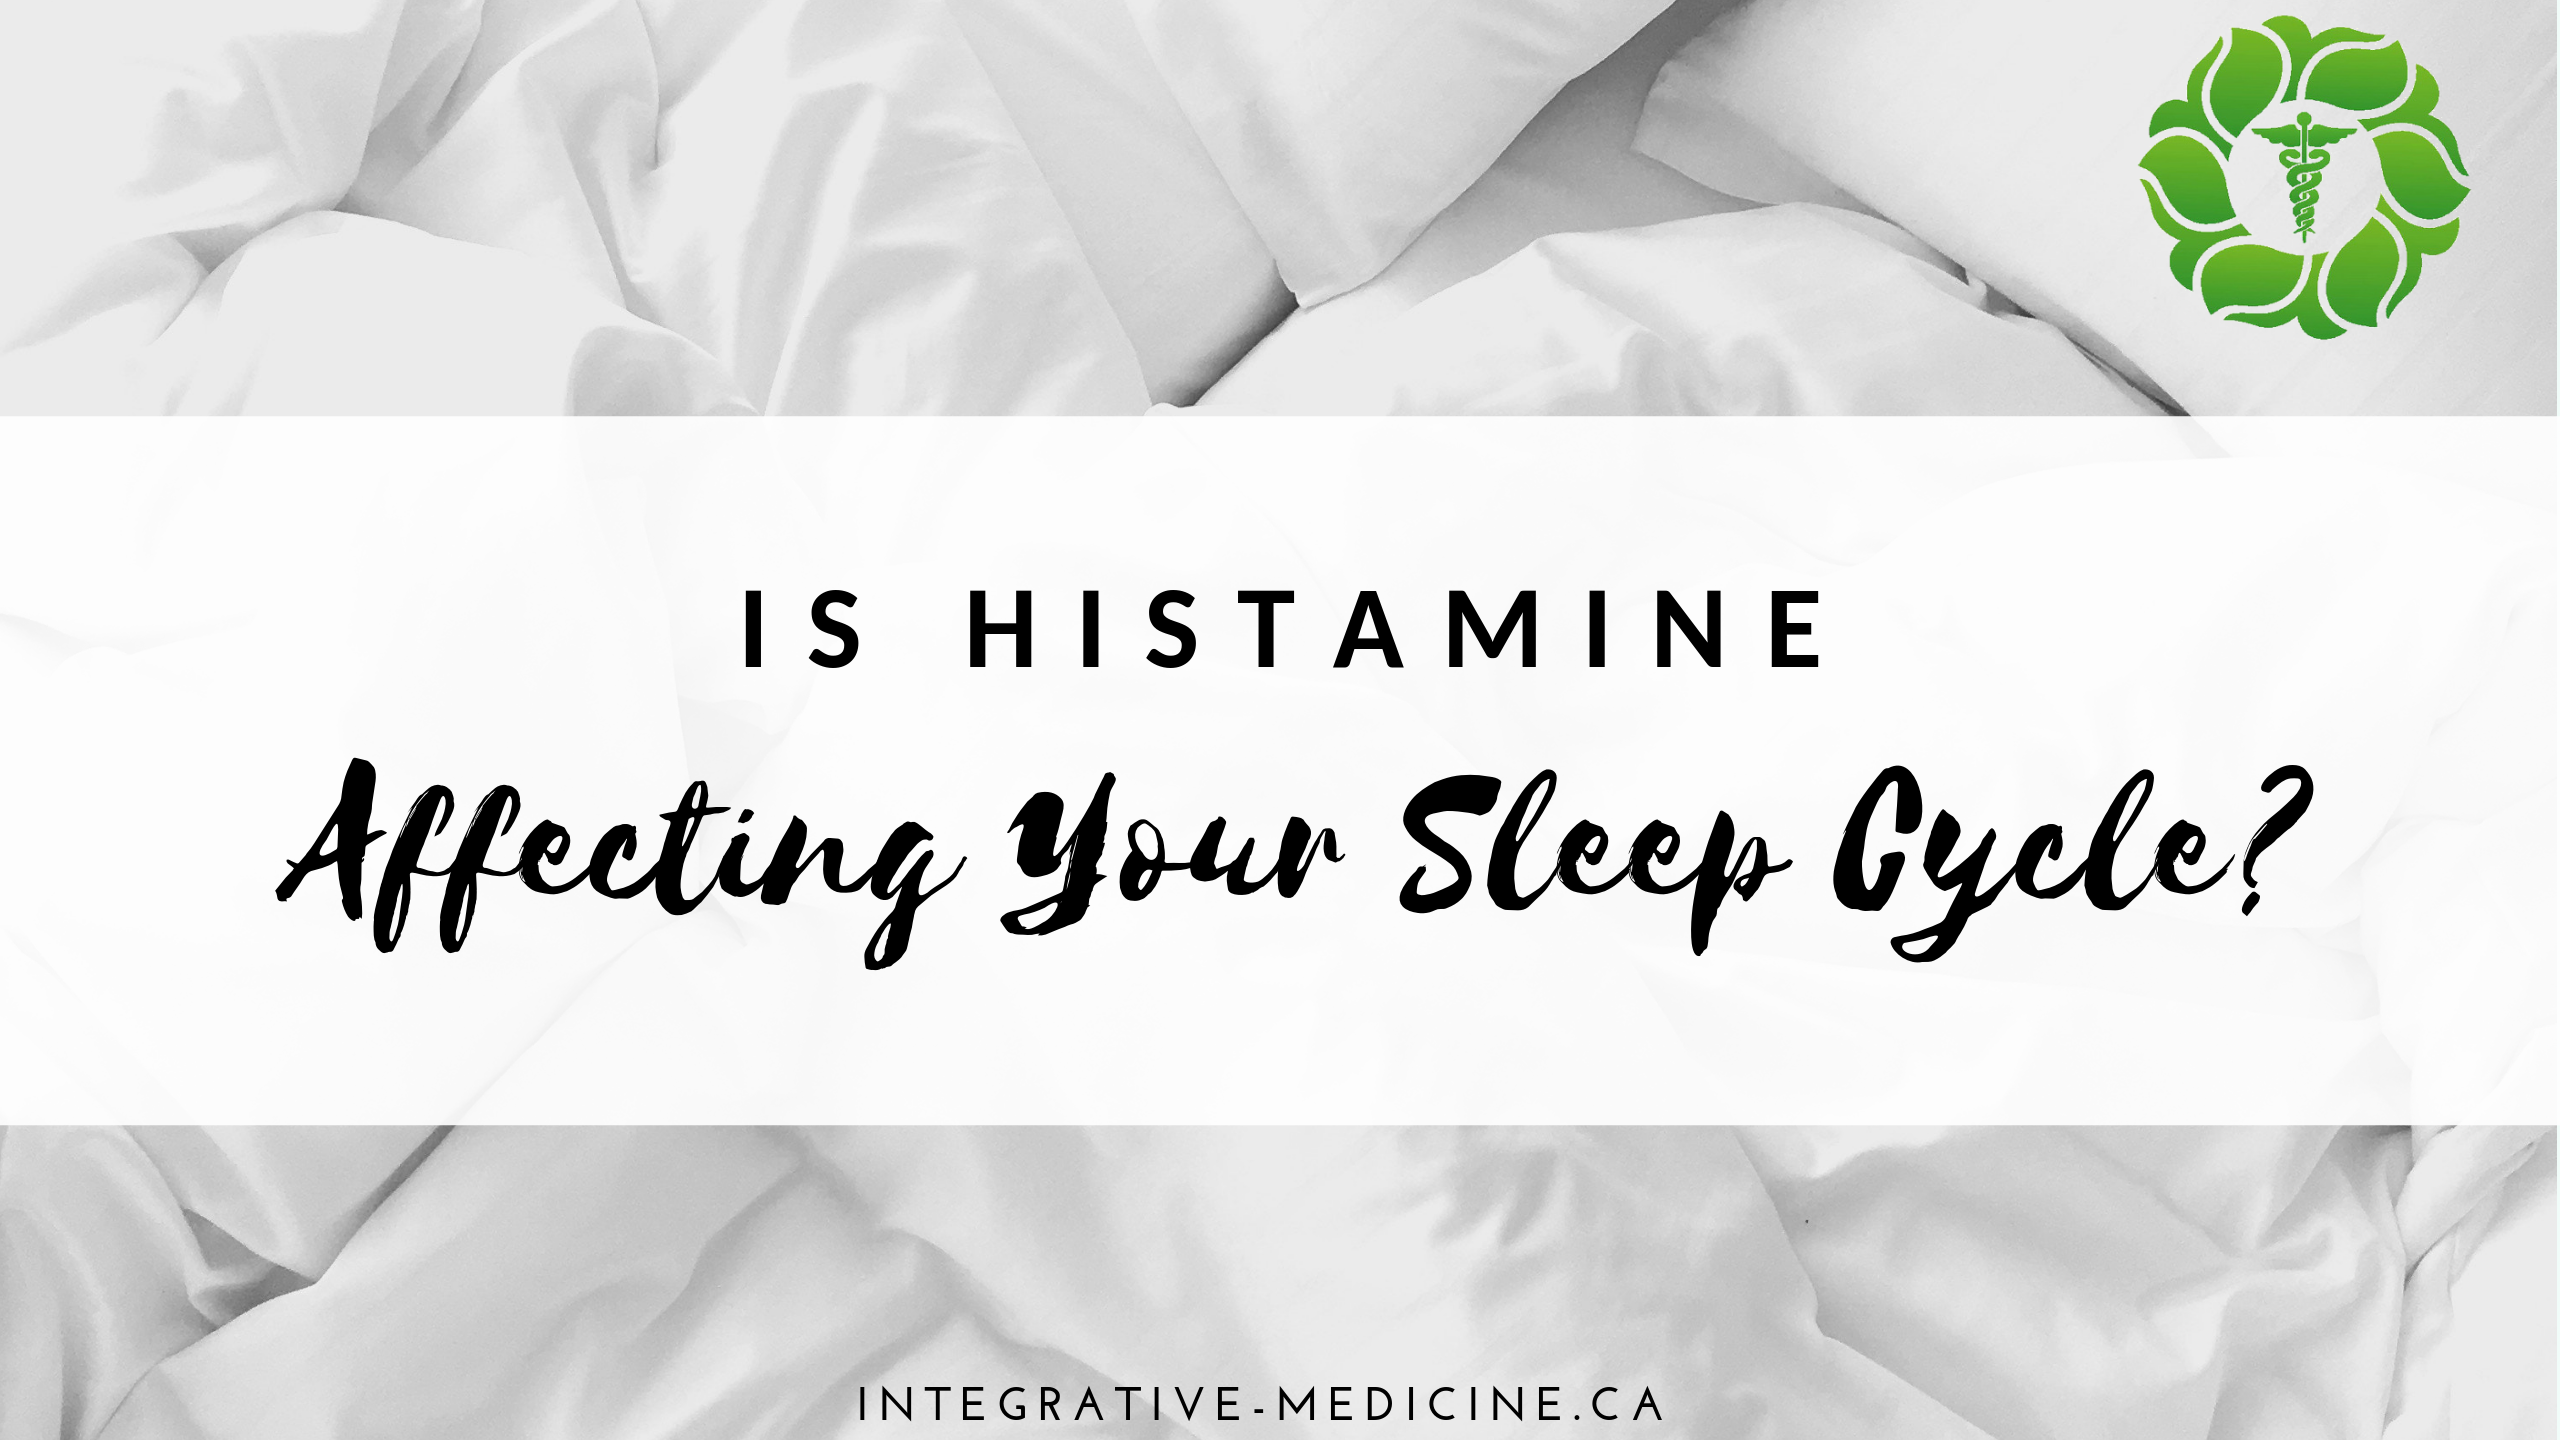 Histamine Sleep Cycle Image Dr. John Gannage